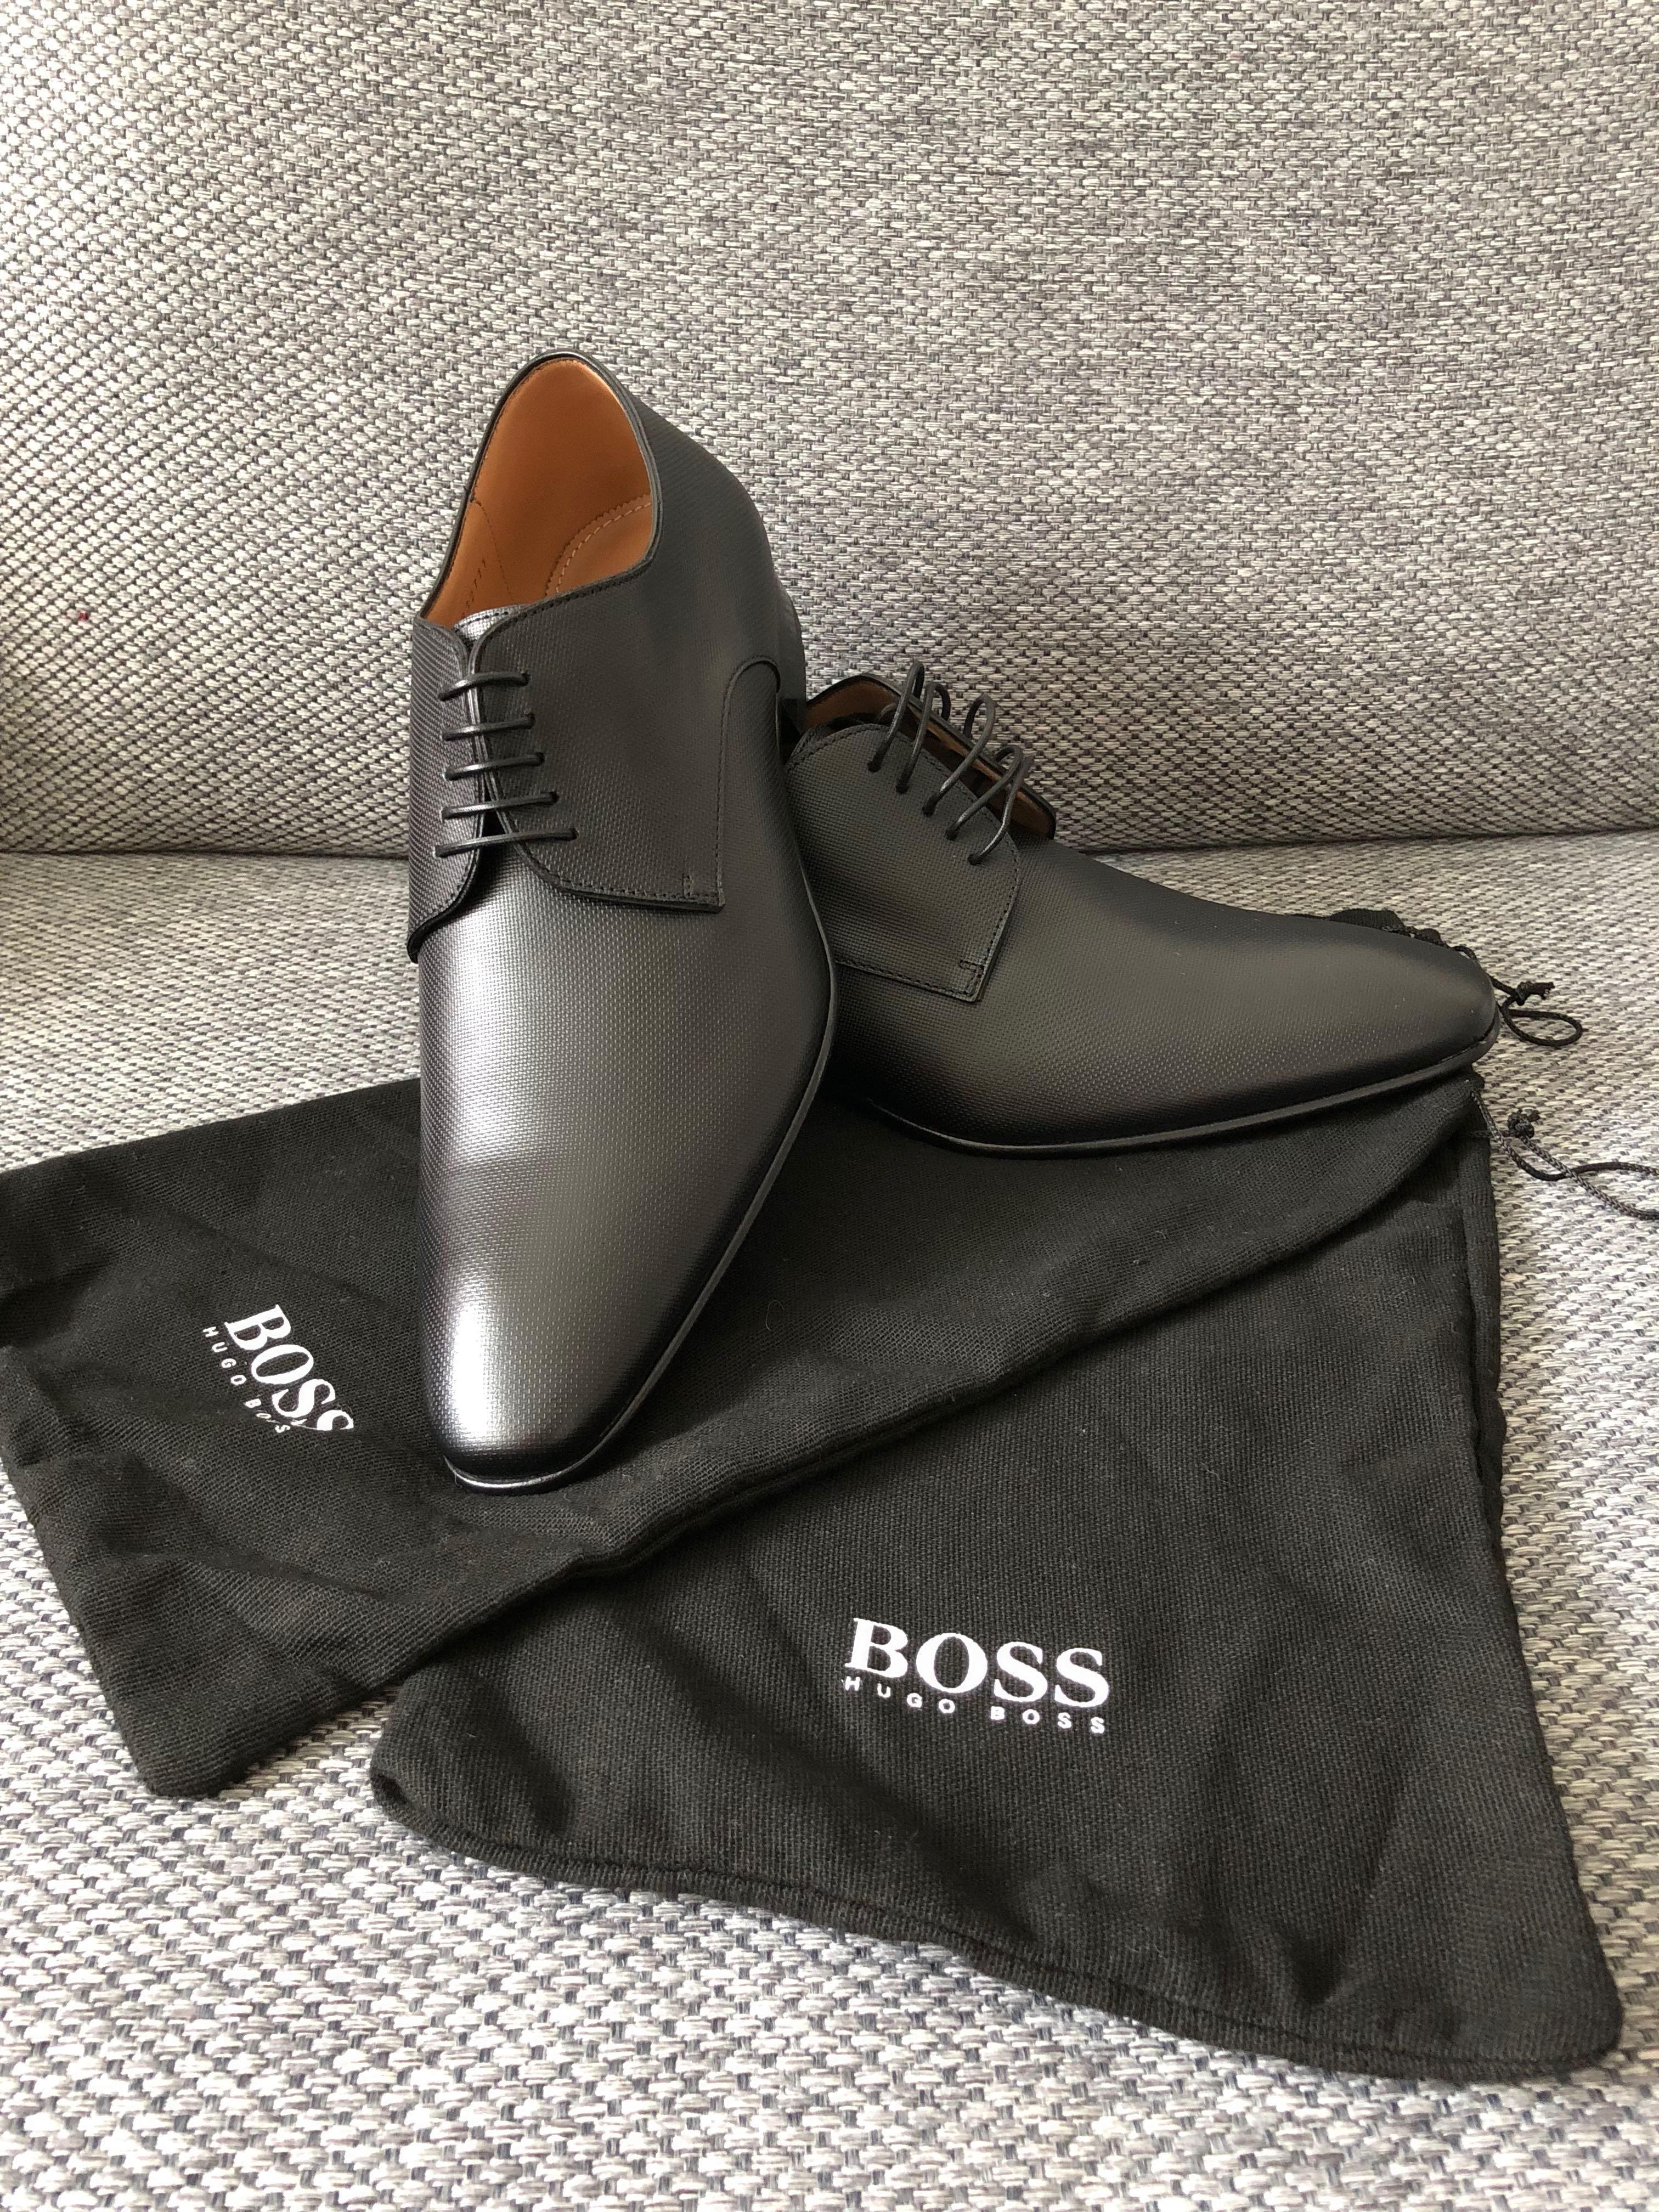 boss brand shoes